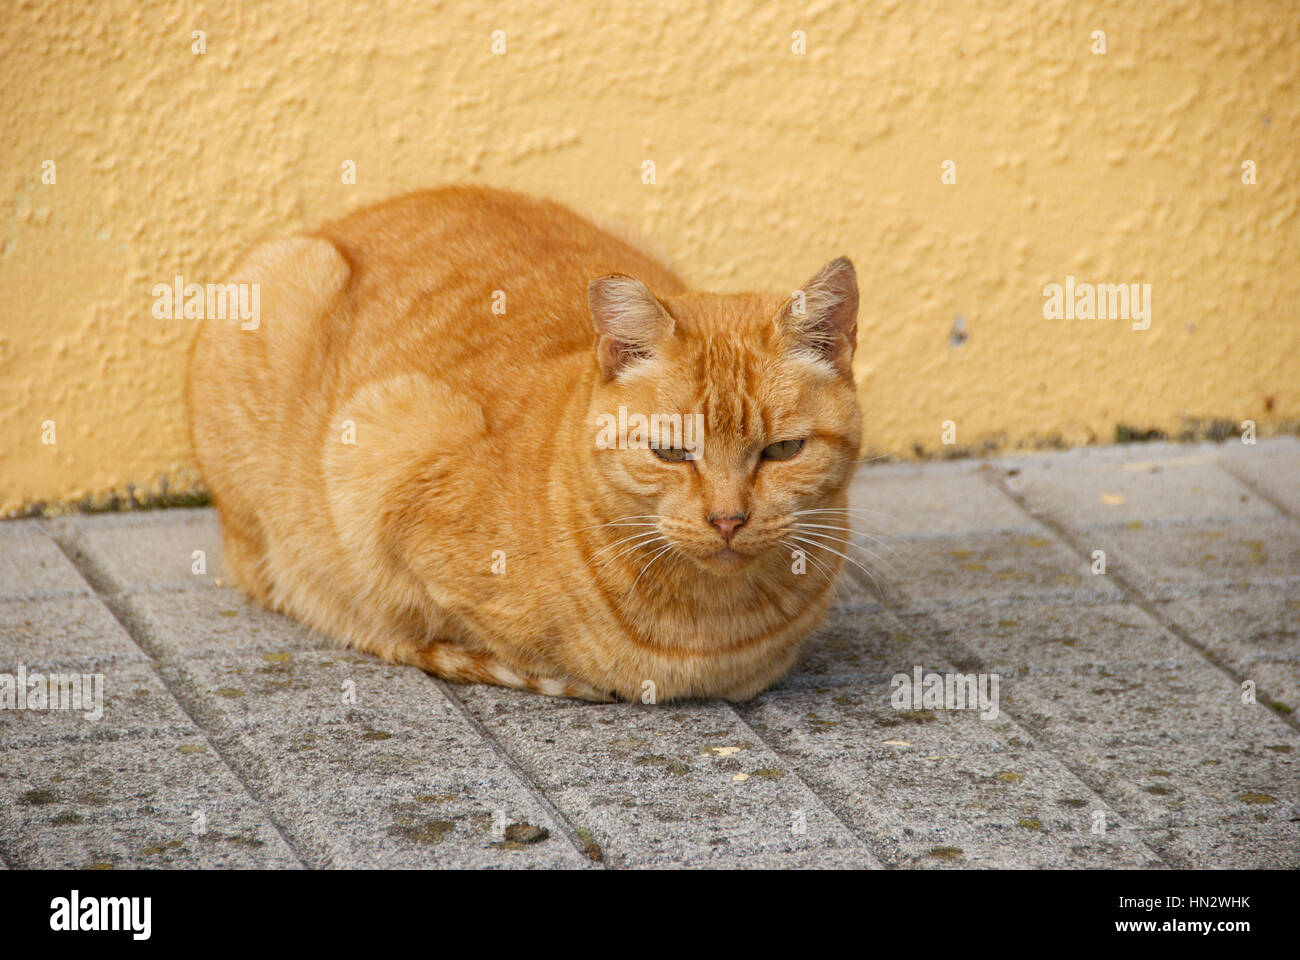 Station Cat at Cambre, A Coruna province, Galicia, Spain. Stock Photo